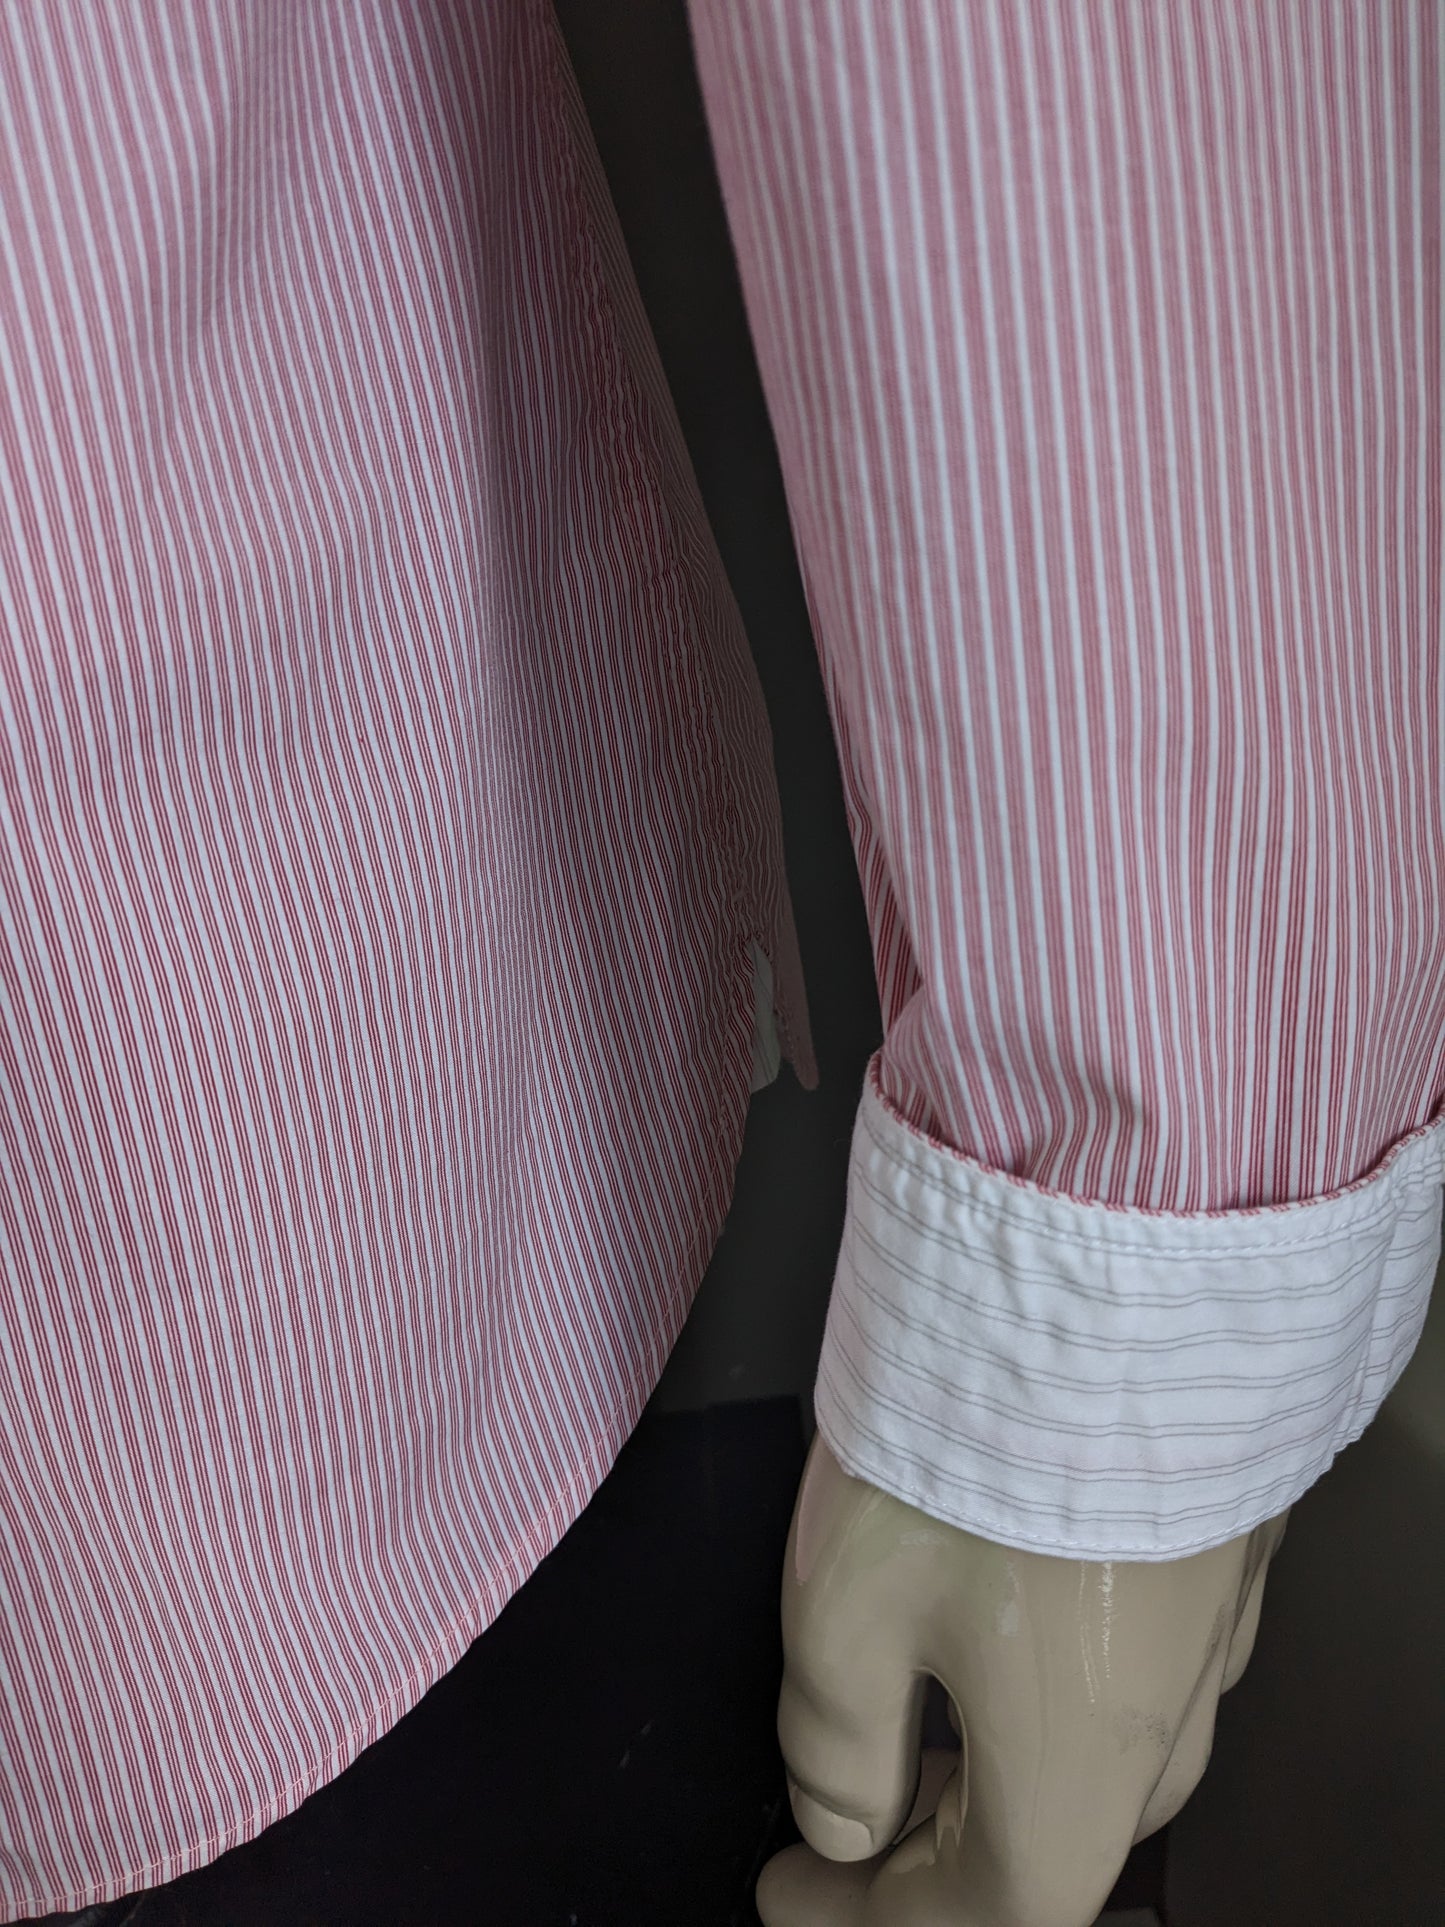 River Island Shirt. Red white striped. Size XXL / 2XL. Slim fit.